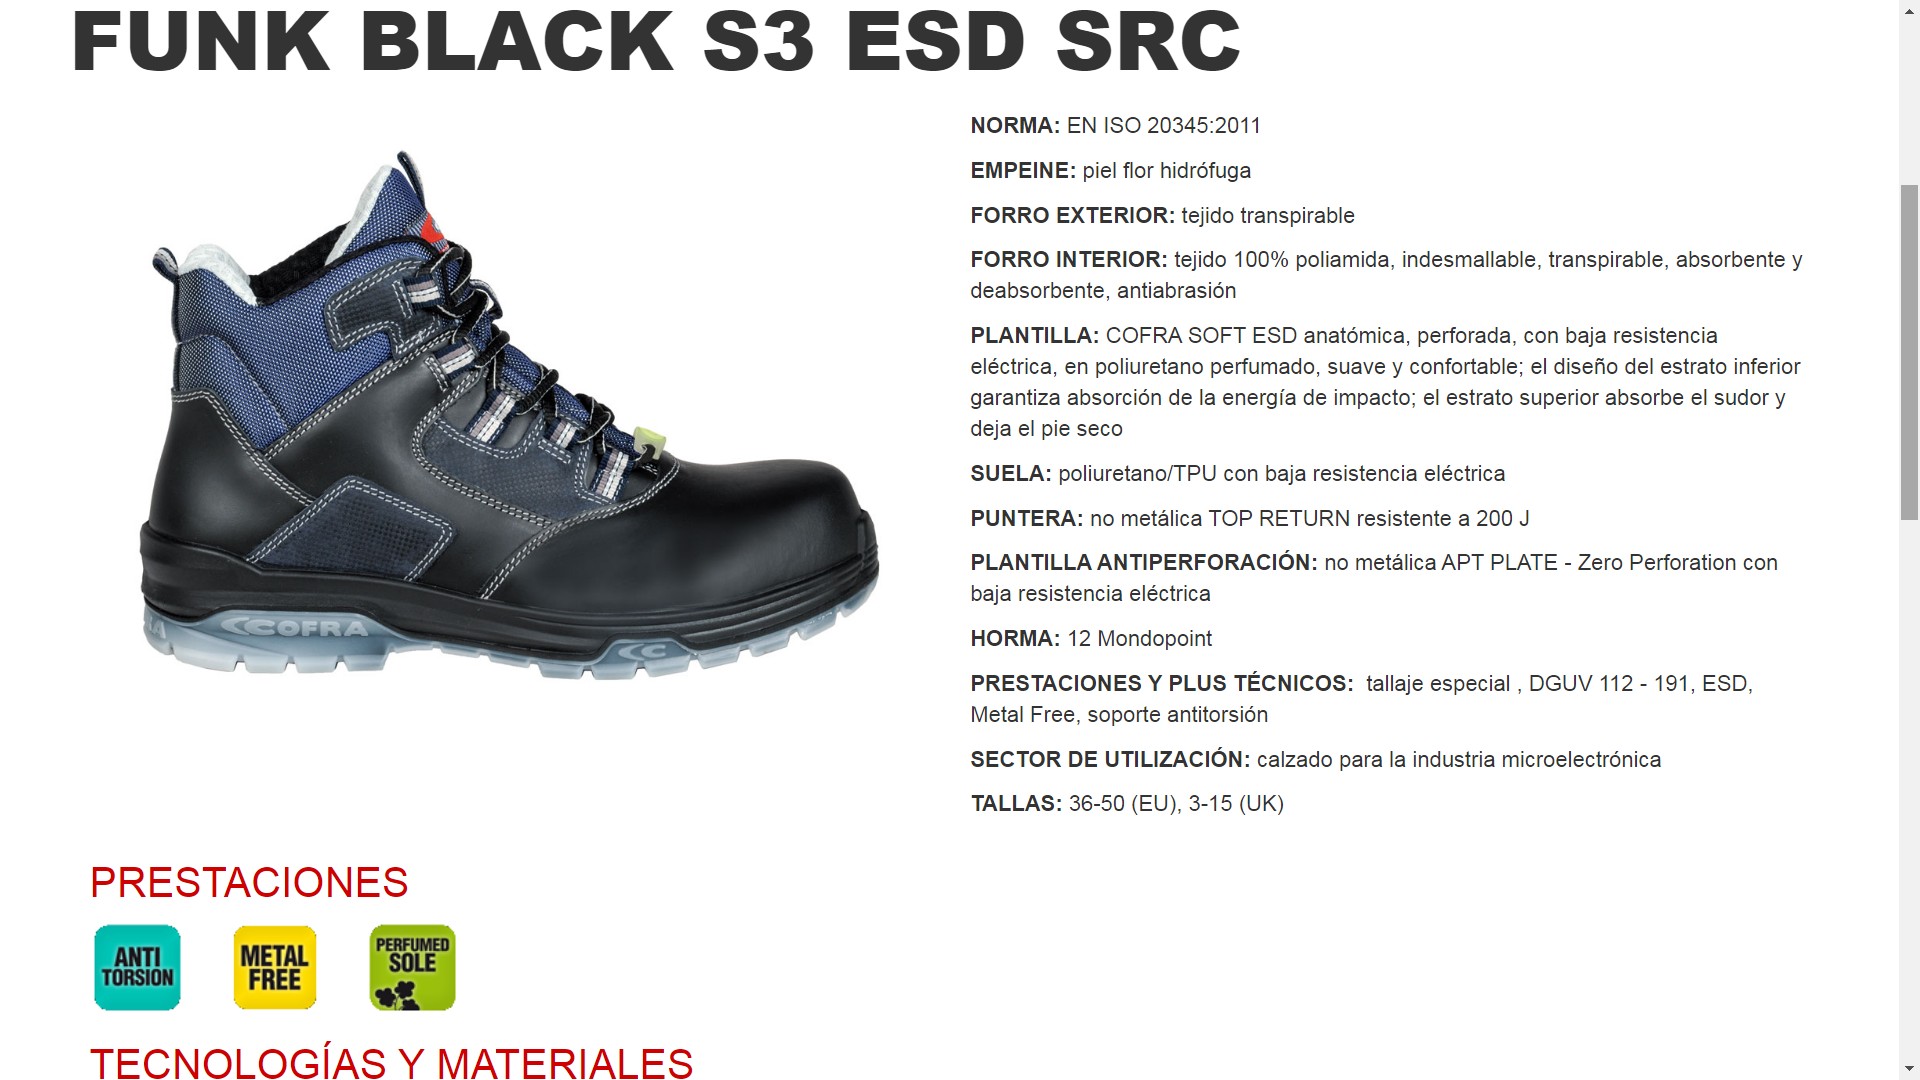 210067  BOTA FUNK BLACK S3 ESD EX SRC CE 36-50 (EU), 3-15 (UK)